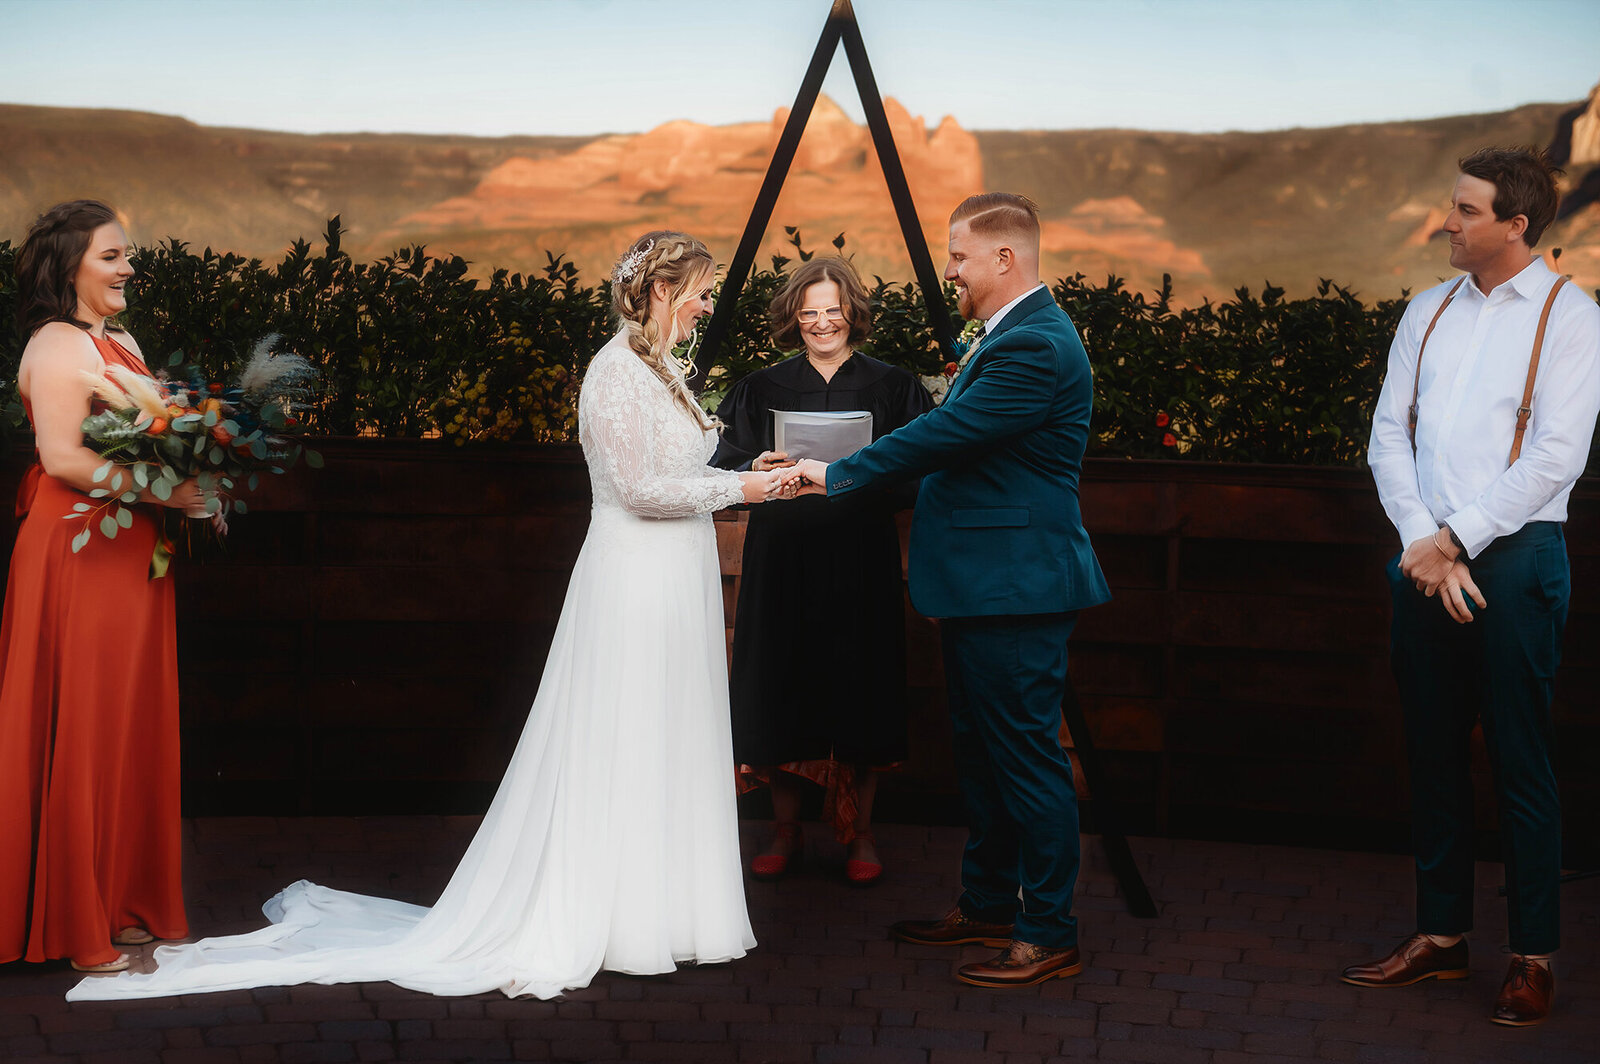 Bride & Groom exchange vows during their Elopement in Sedona, AZ.